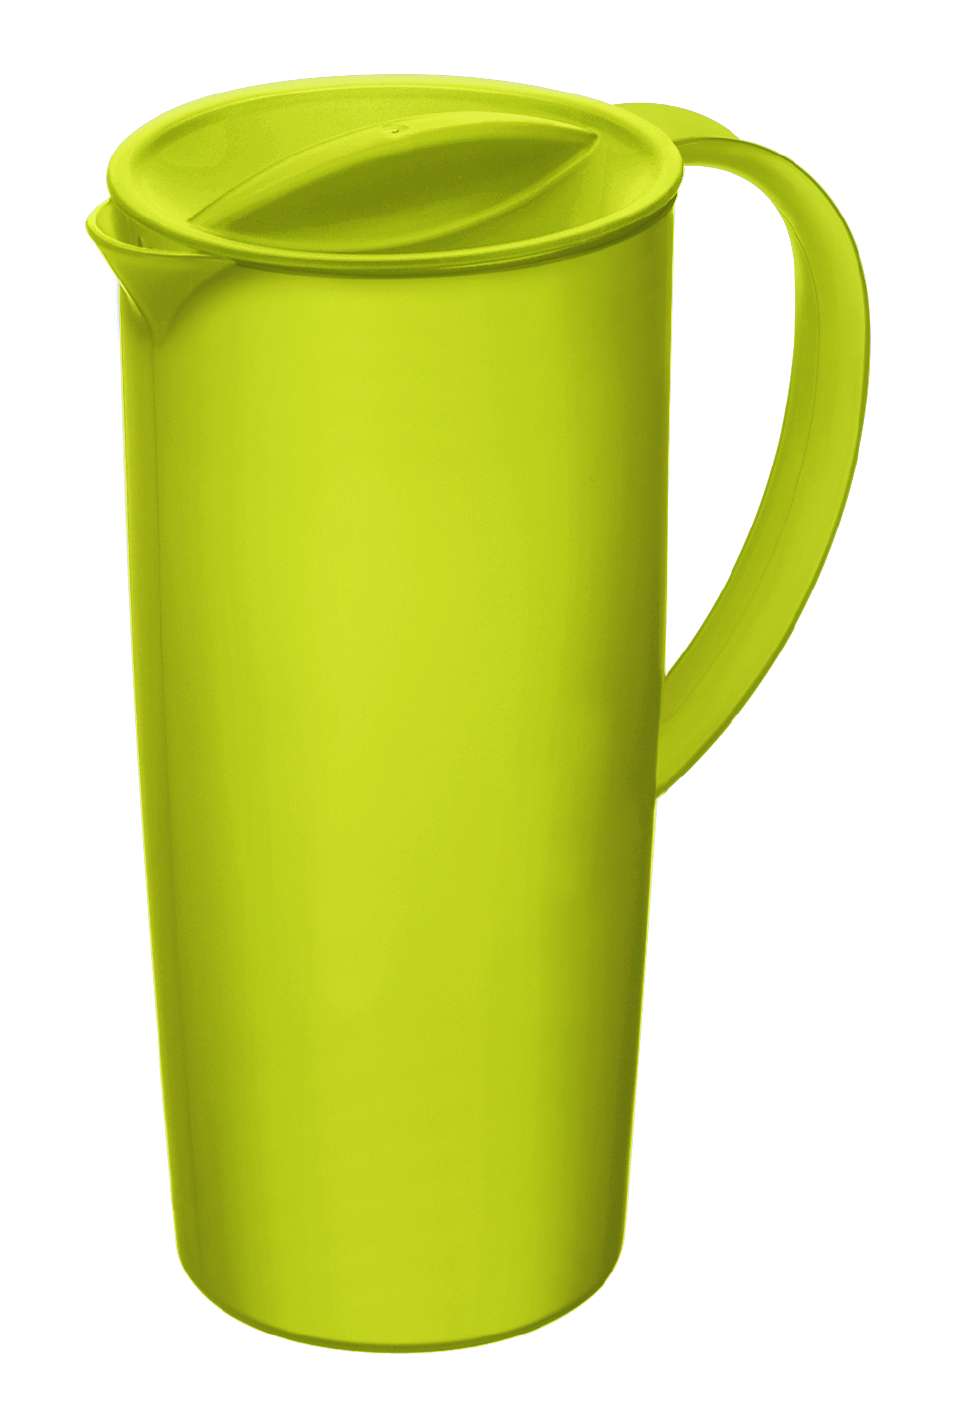 Rotho Caruba Krug 1,2 Liter grün